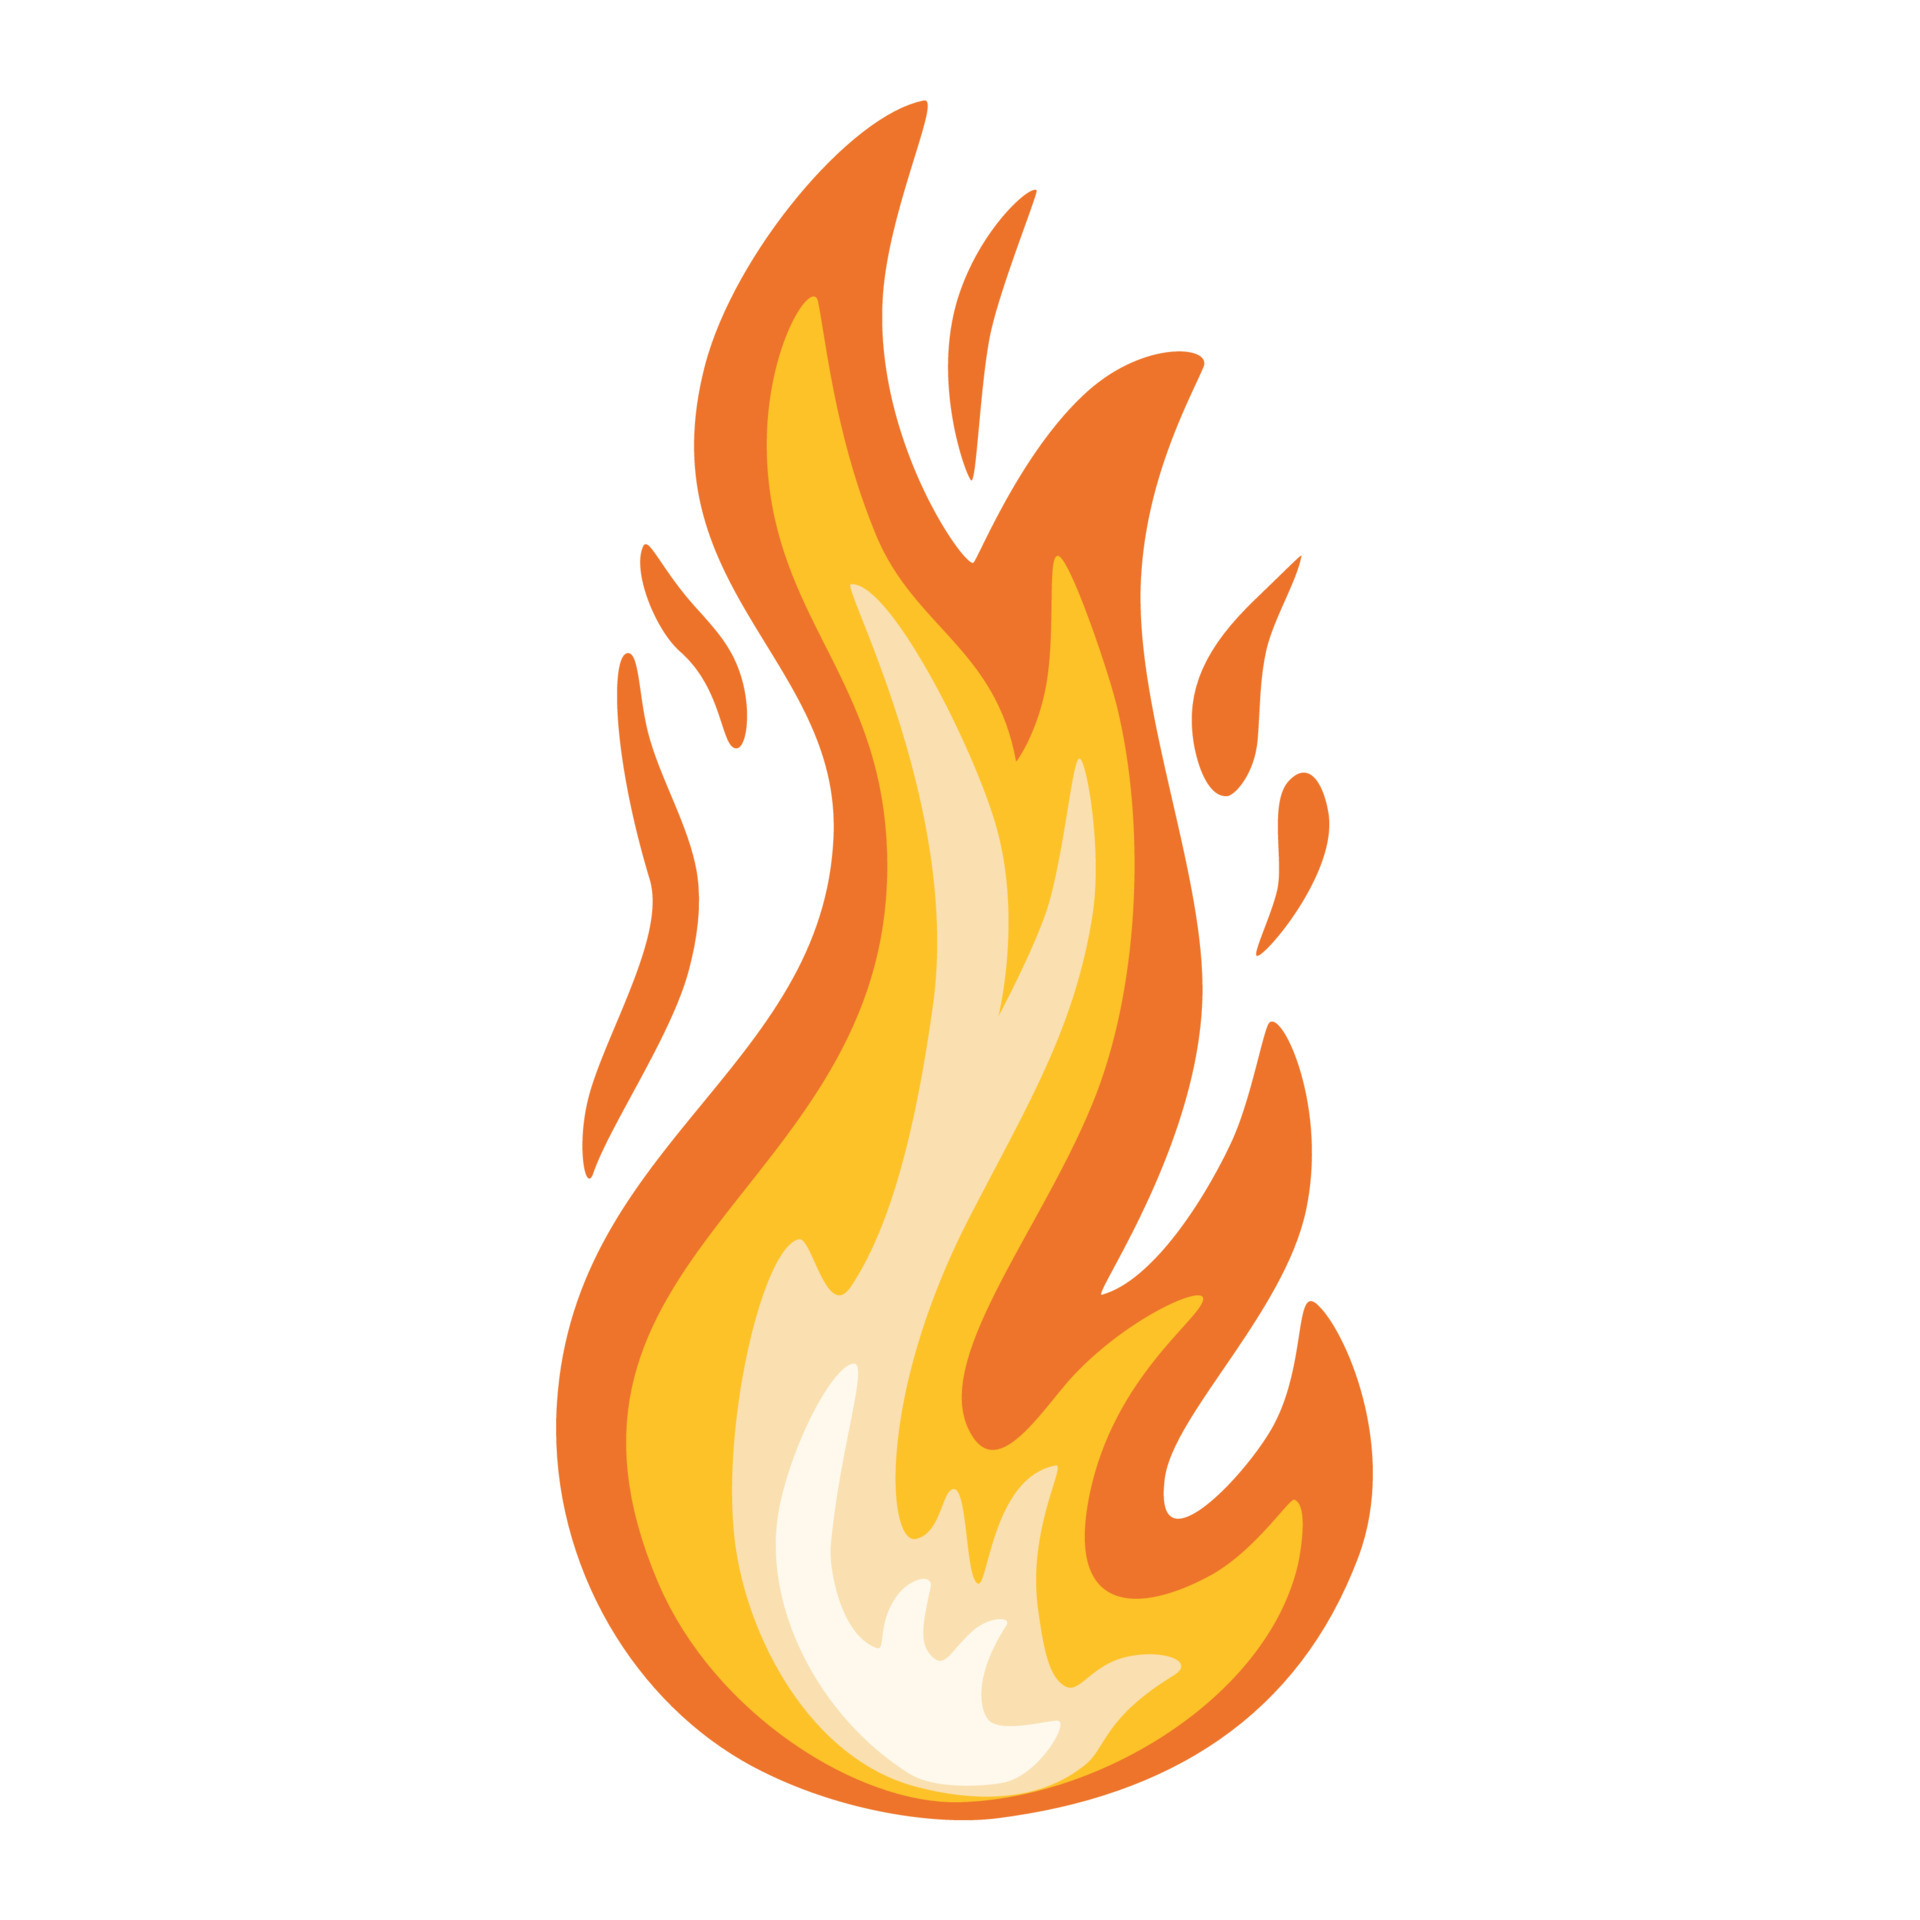 Incêndio Chama Símbolo - Gráfico vetorial grátis no Pixabay